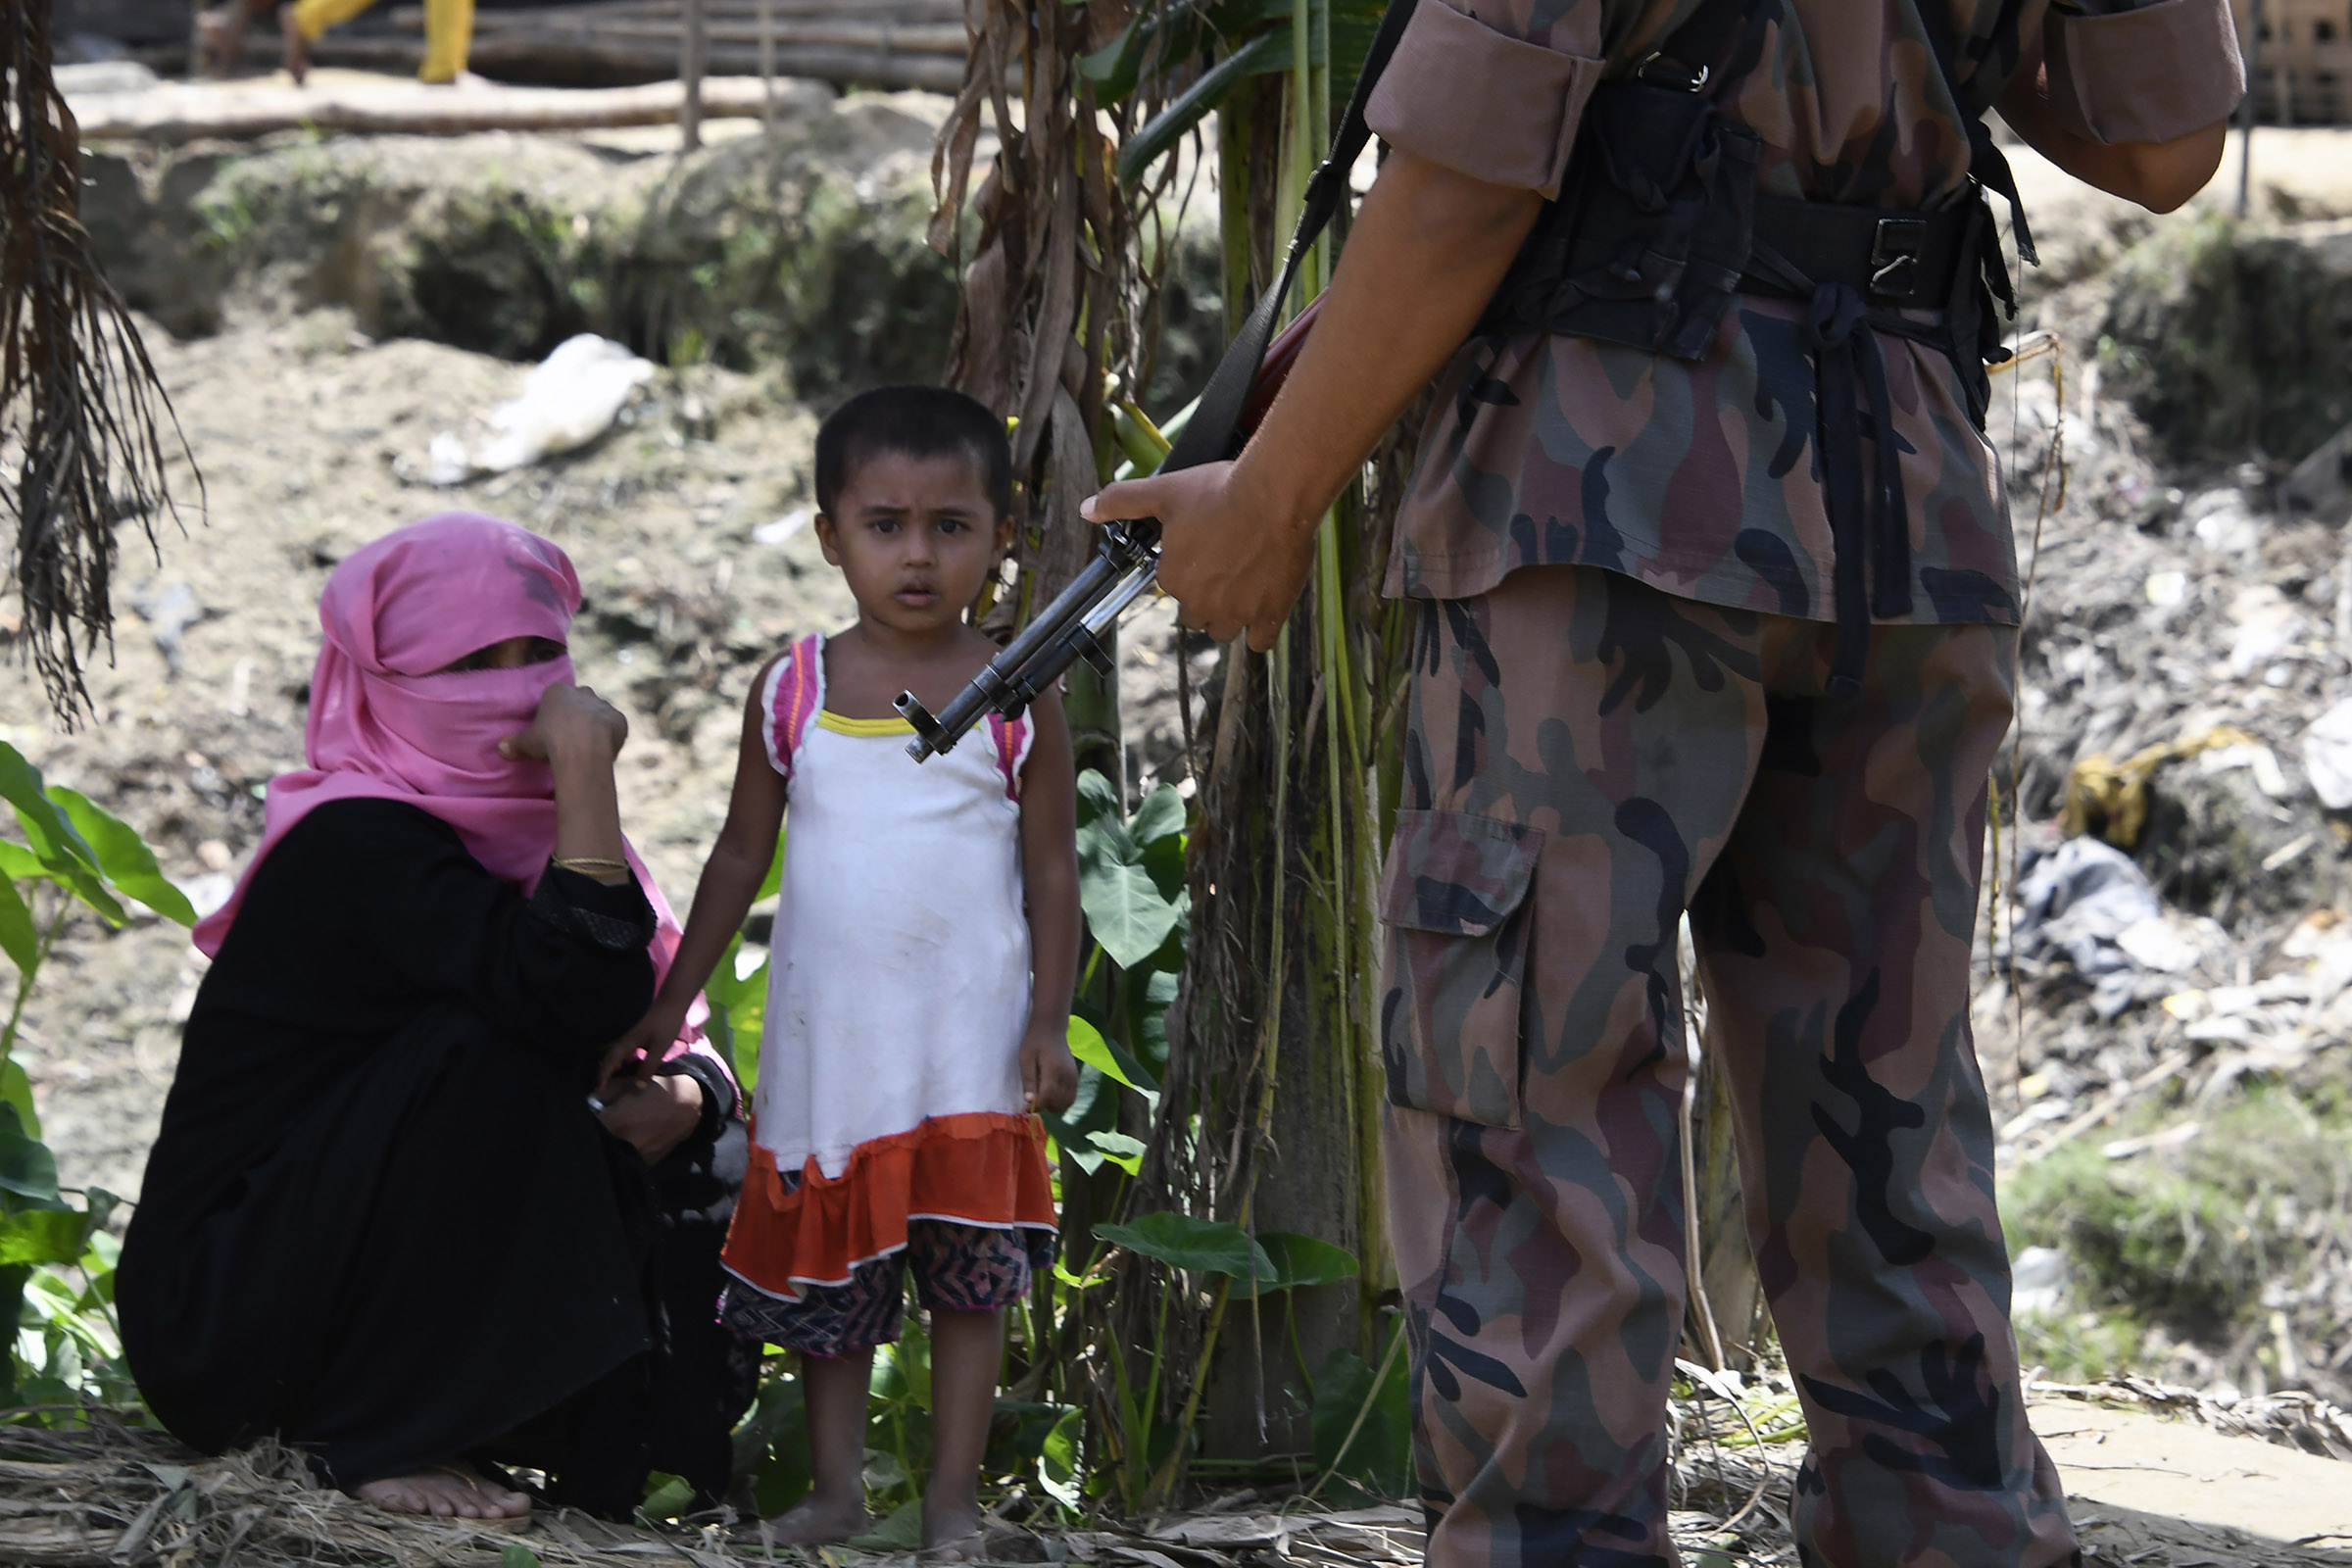 Rohingya children at risk during Myanmar refugee crisis